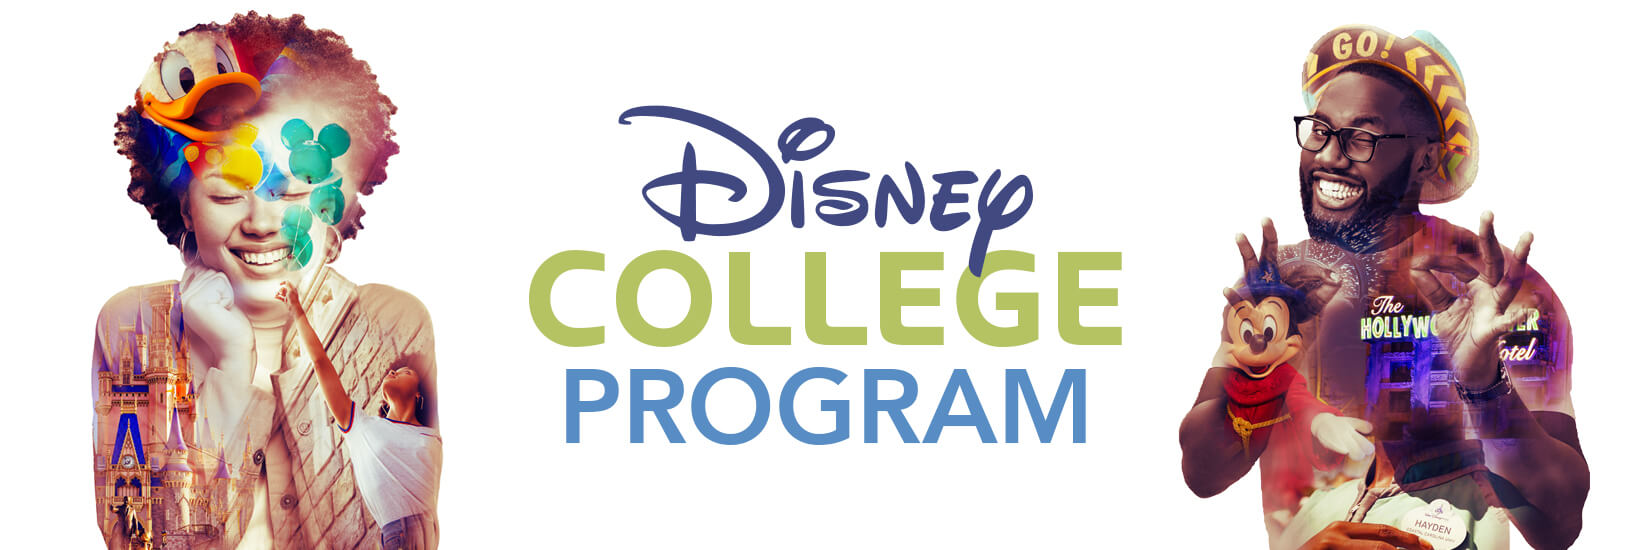 Disney College Program Returns